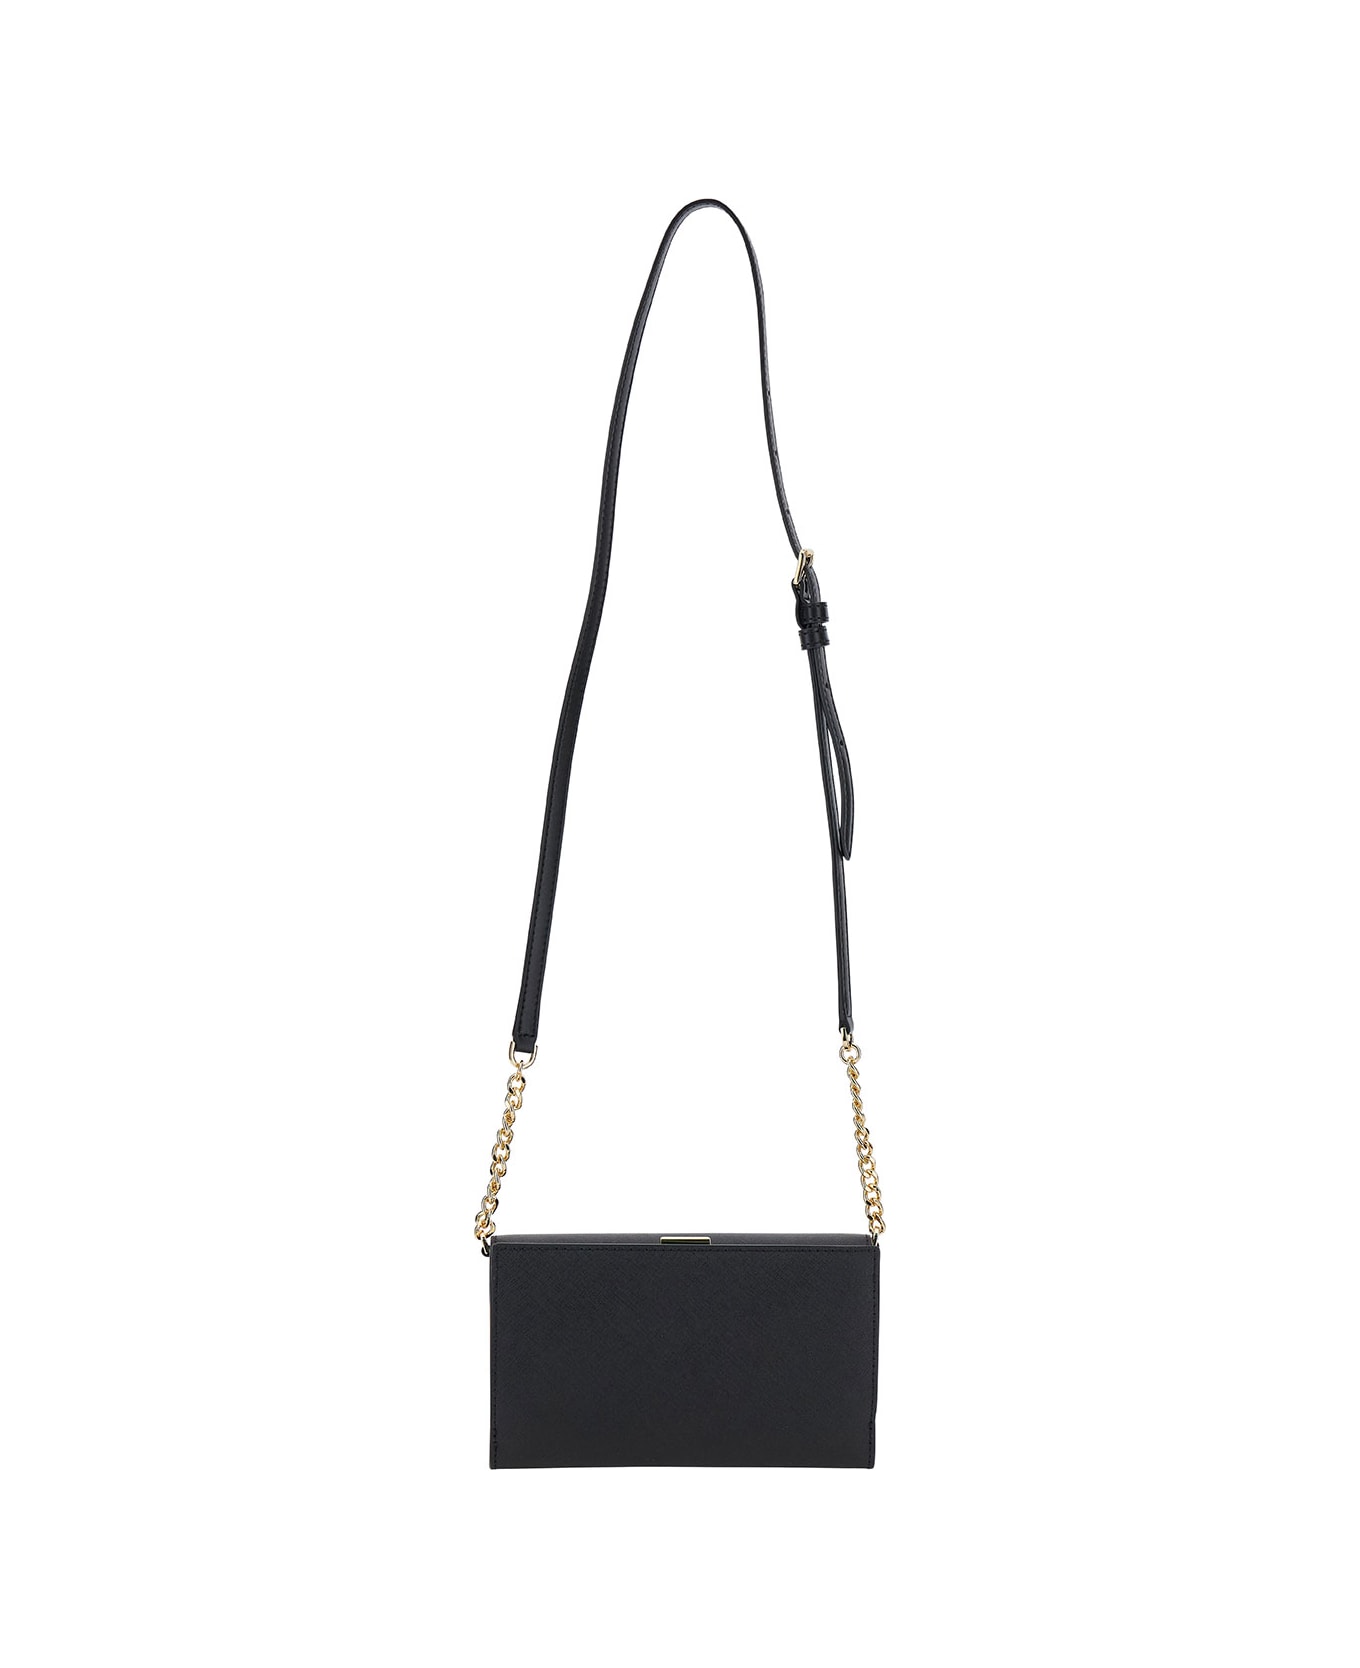 MICHAEL Michael Kors Black Shoulder Bag With Logo Detail In Leather Woman - Black